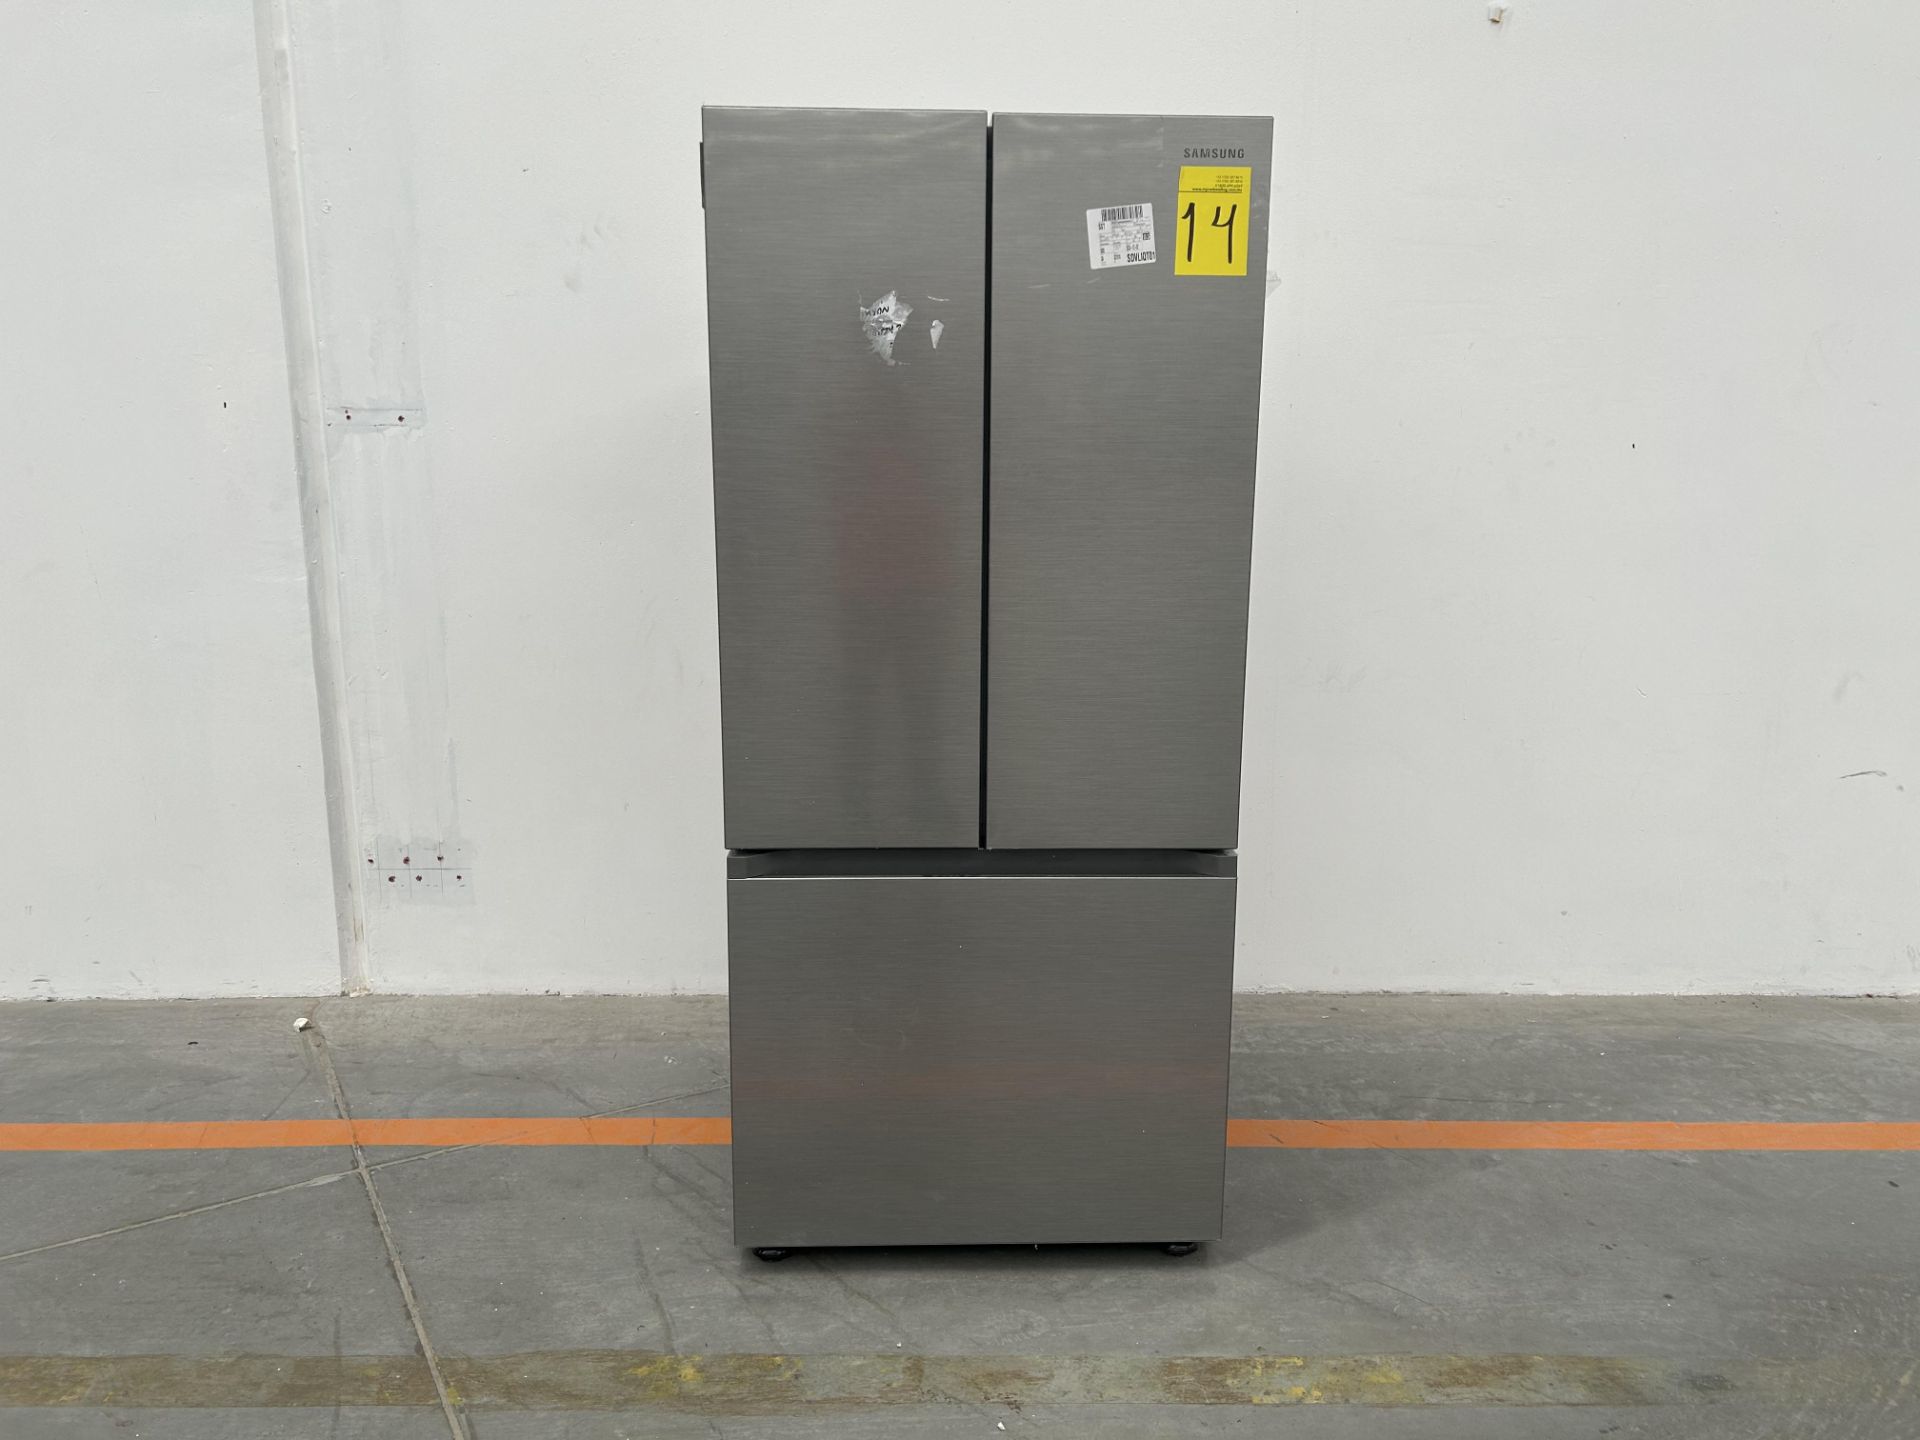 (NUEVO) Refrigerador Marca SAMSUNG, Modelo RF22A410S9, Serie 01694K, Color GRIS